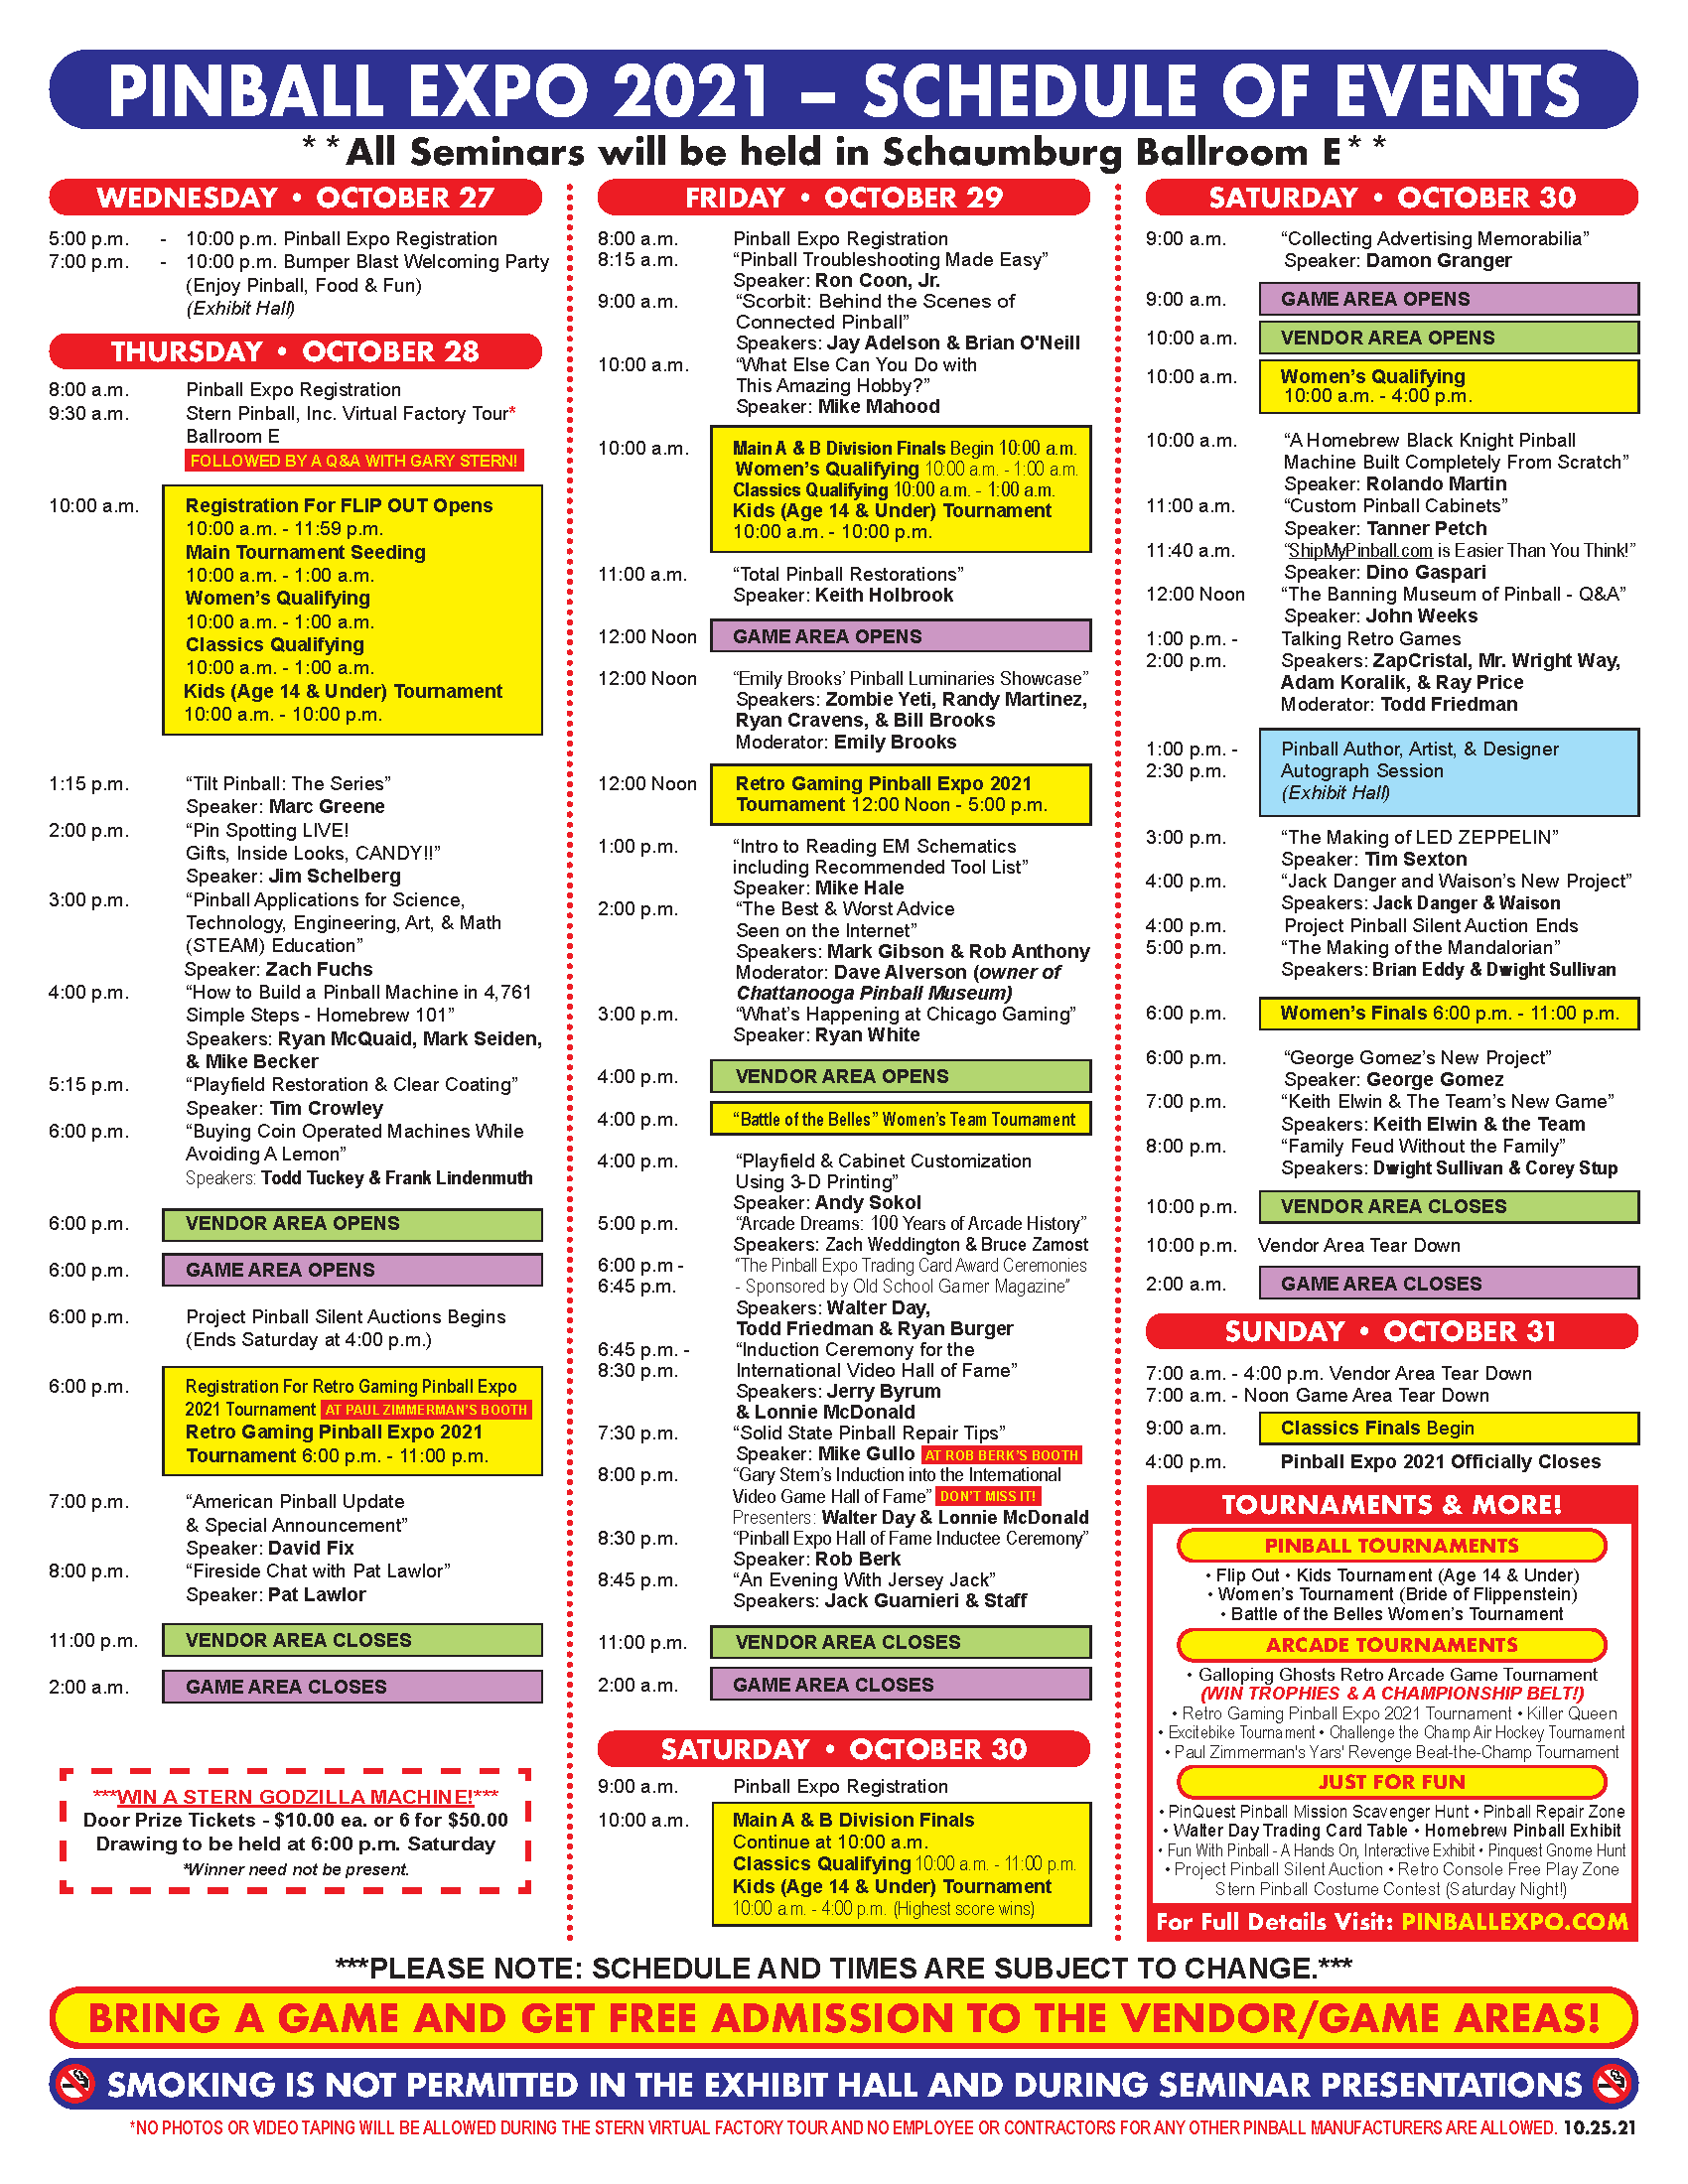 Pinball Expo 2021 Schedule (10.25.21)